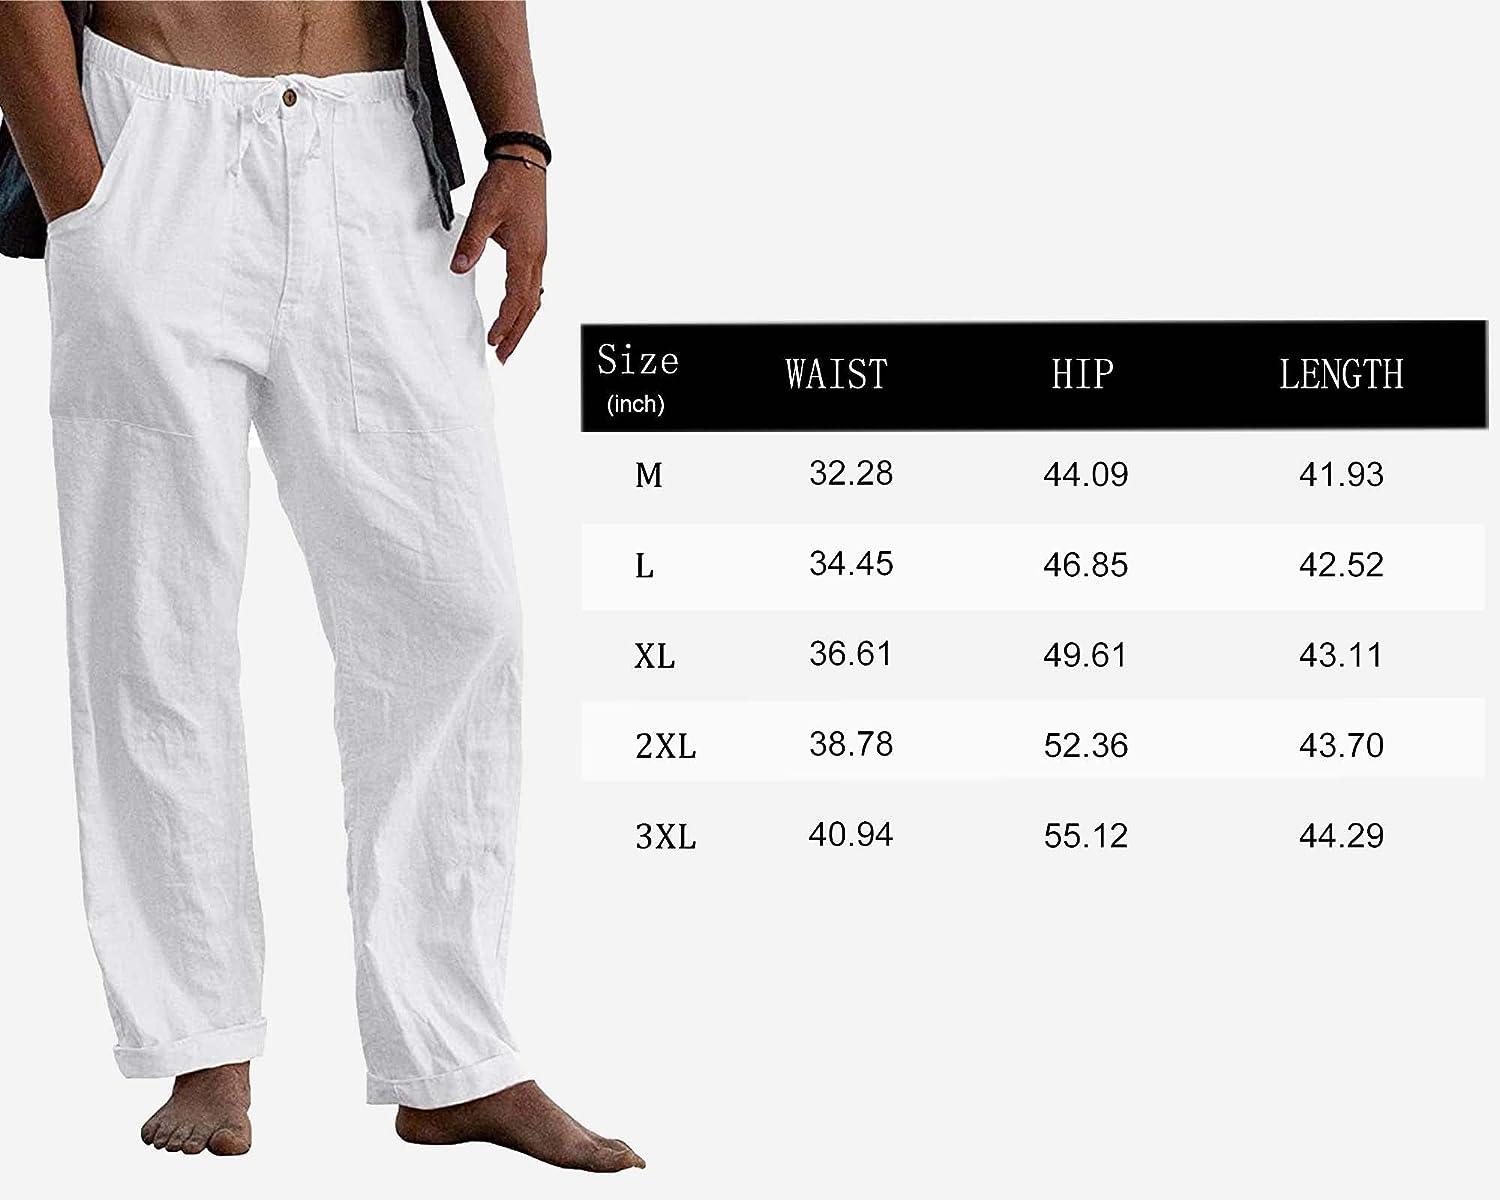 Pioneer Camp Casual Pants Men Cotton Pants For Men 2018 New Fashion Men  Pants Brand Slim Fit White Elastic Male Trousers 677043 - Casual Pants -  AliExpress